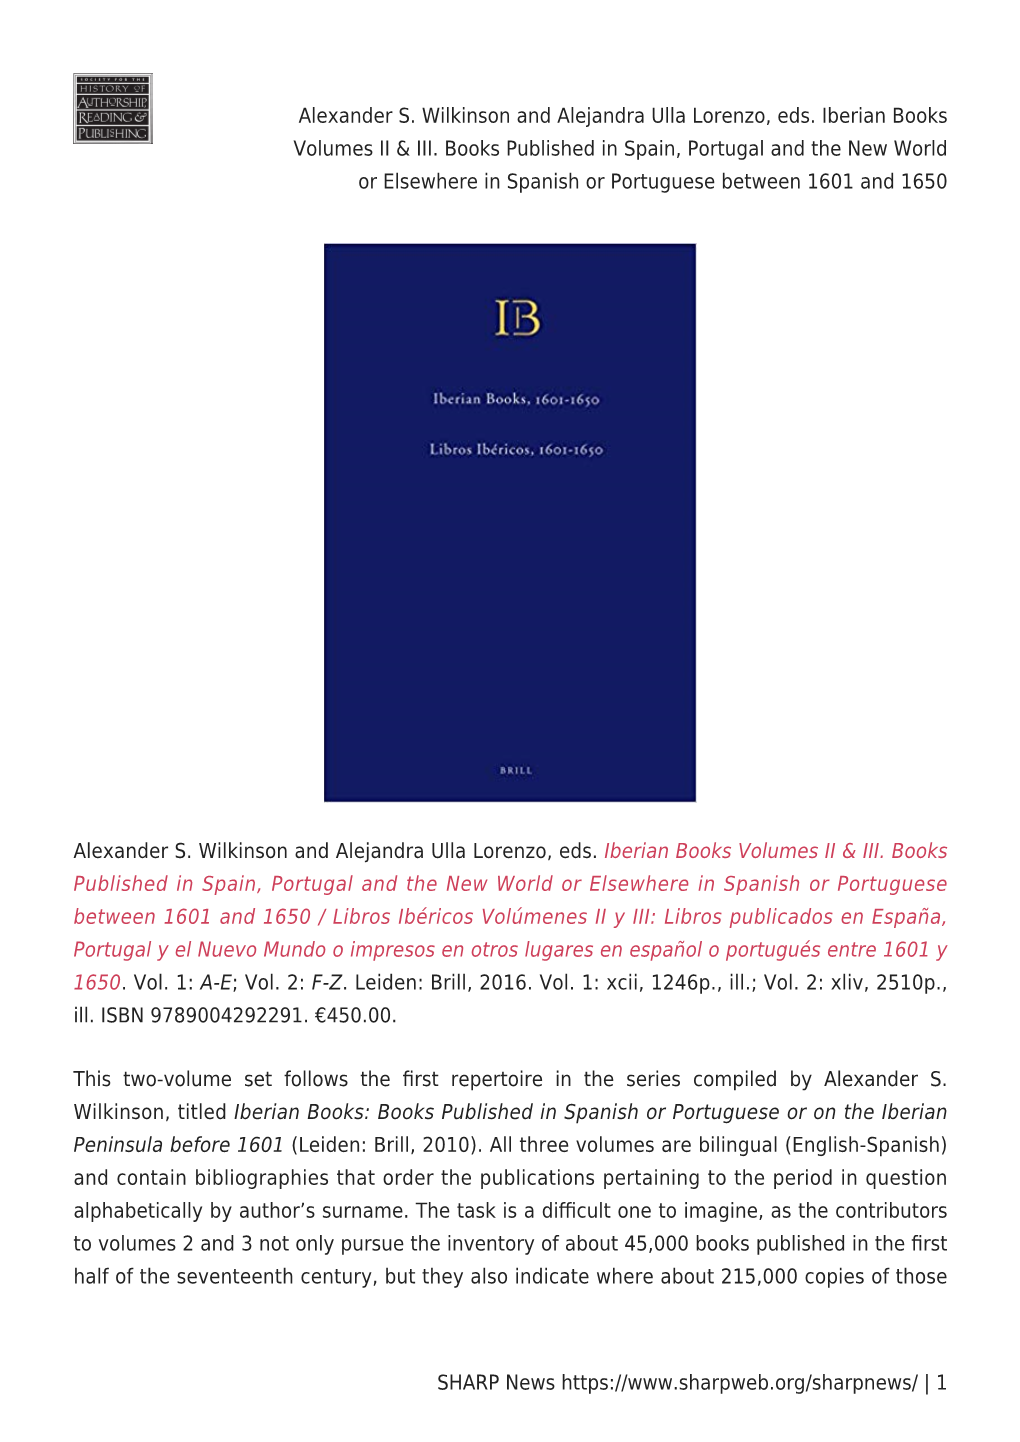 Alexander S. Wilkinson and Alejandra Ulla Lorenzo, Eds. Iberian Books Volumes II & III